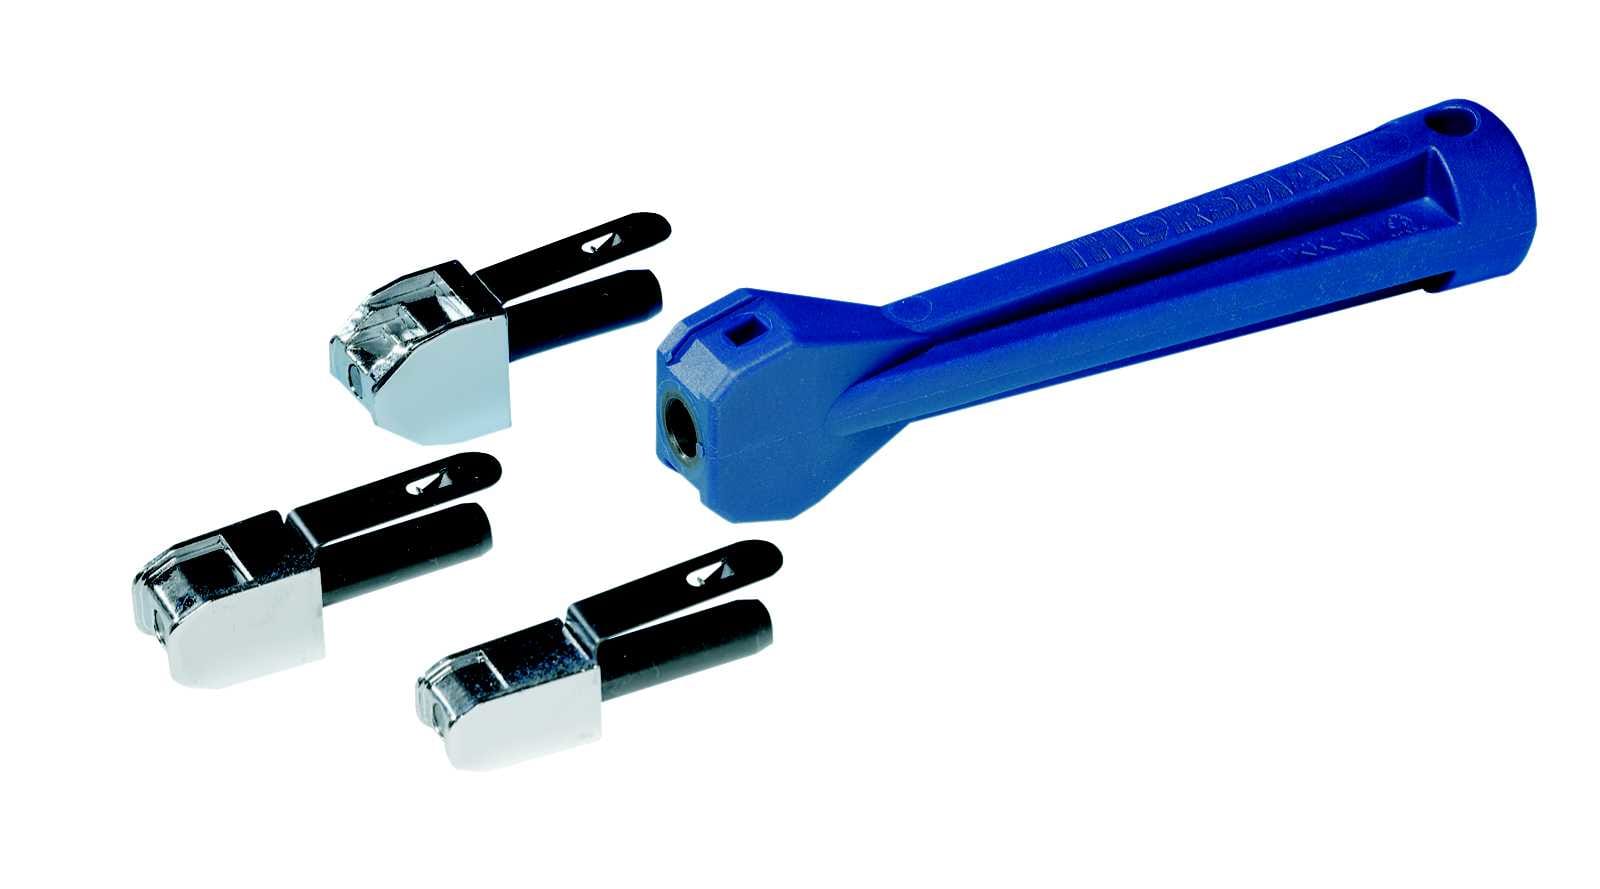 Thorsman -  TKK/APK verktøysett, blå, sett à 1